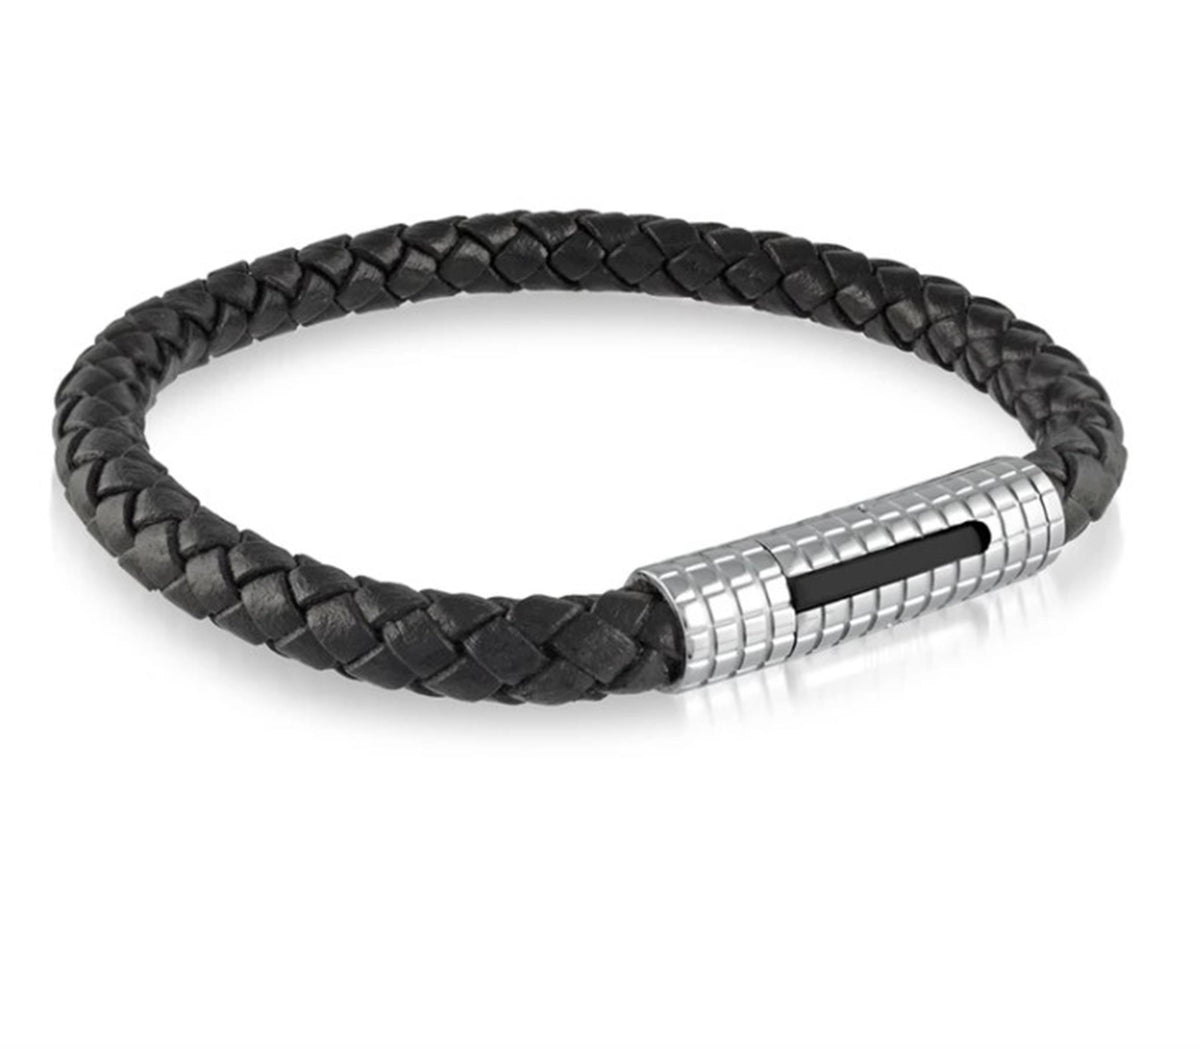 Italgem Stainless Steel Black Leather Bracelet with Push Clasp